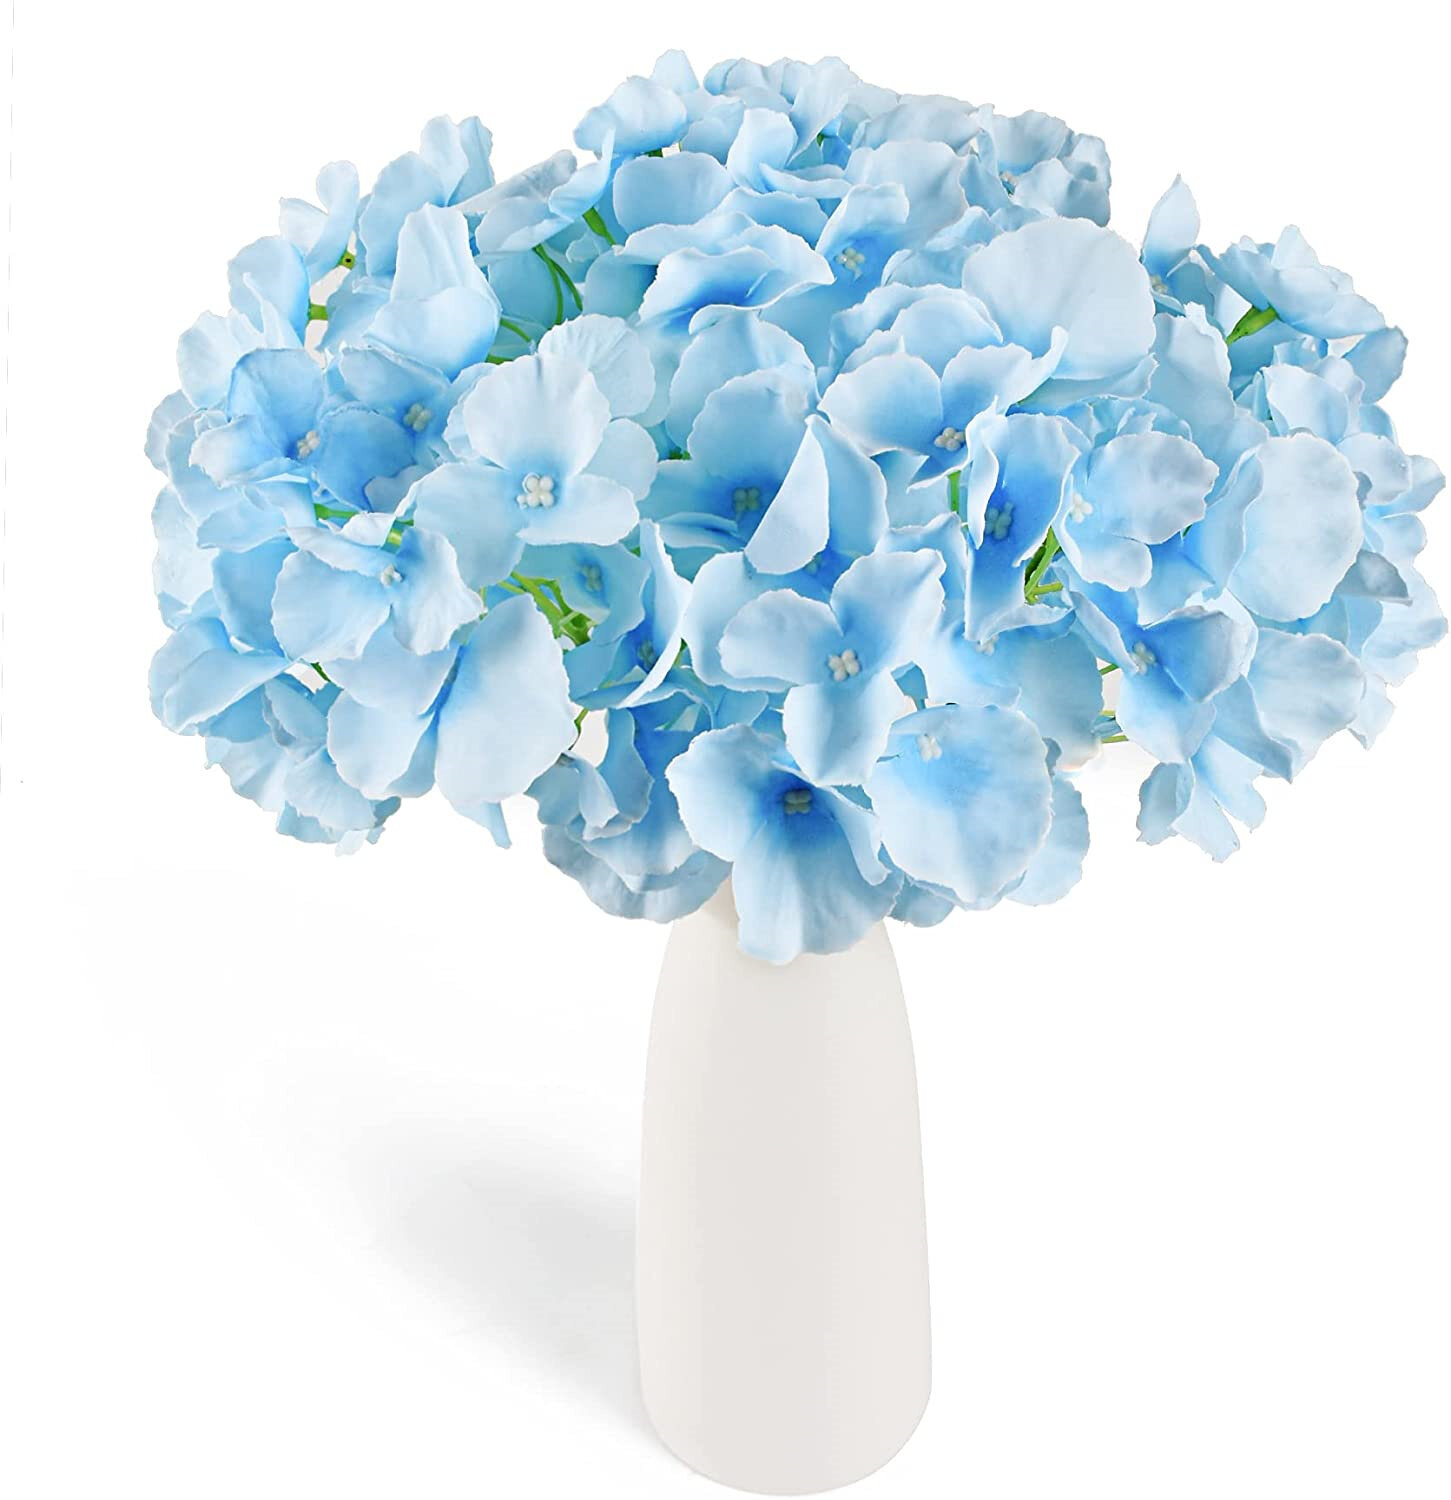 Artificial Poppy Flowers Decorative Silk Flowers Wedding Party Home Decor x 1 Pc